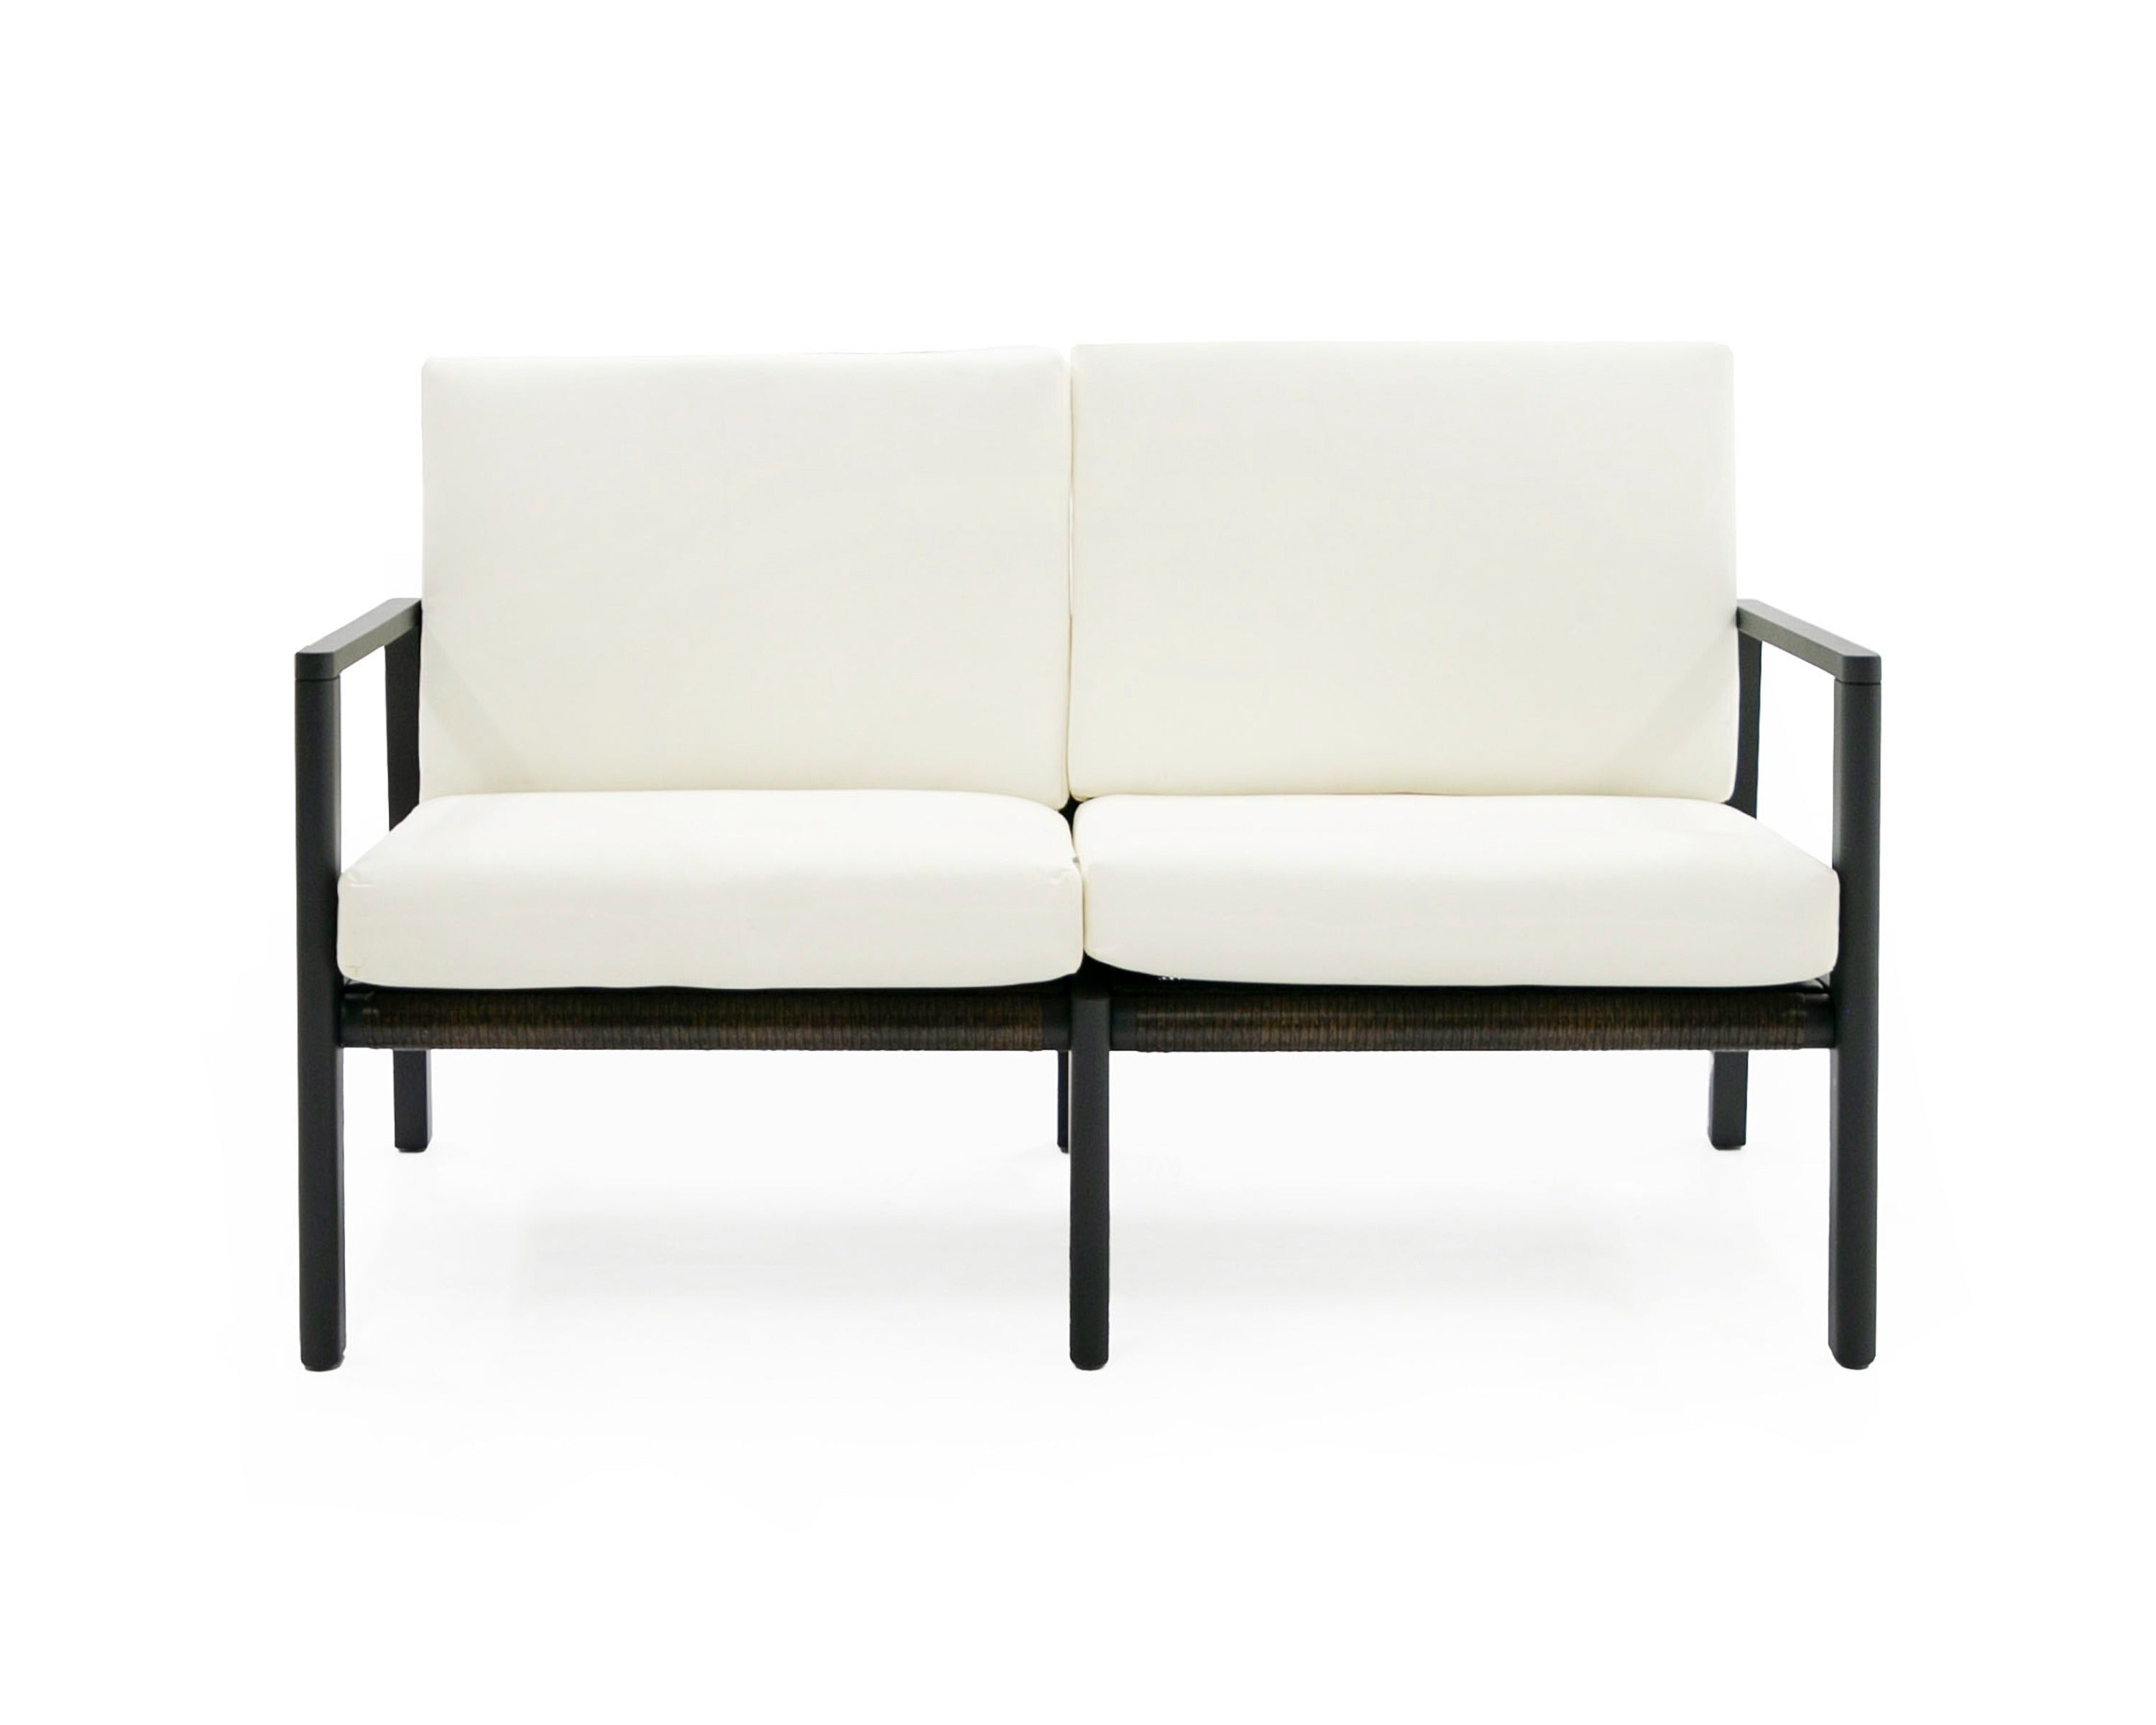 Renava Cuba - Modern Outdoor Sofa Set